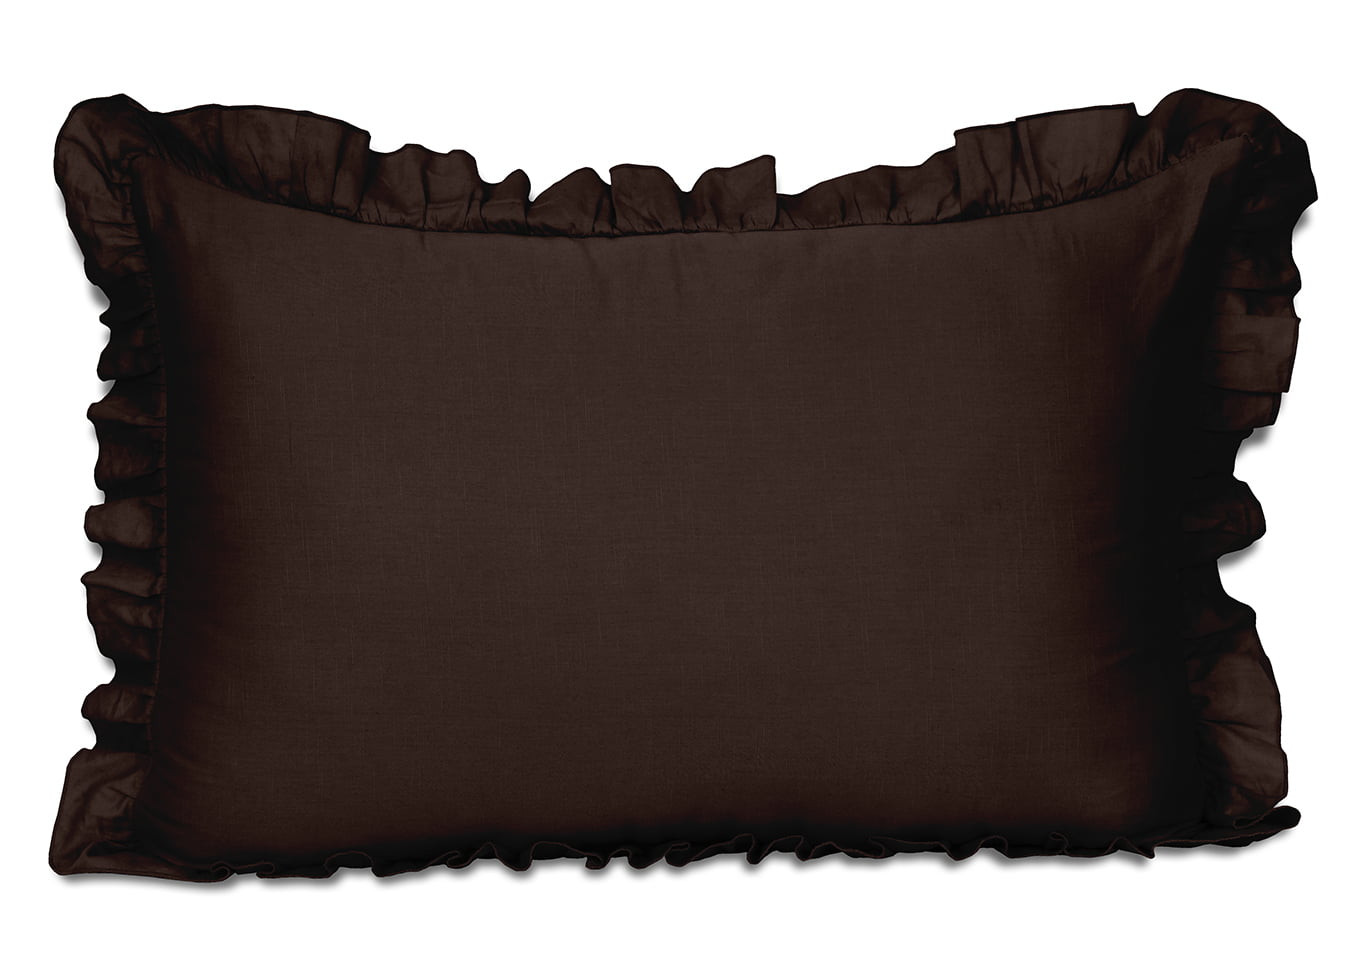 Vargottam Ruffled Pillow Sham Standard 26x20 Cotton Frill Pillow Cases Shabby Chic Farmhouse Decor Pillowcase 